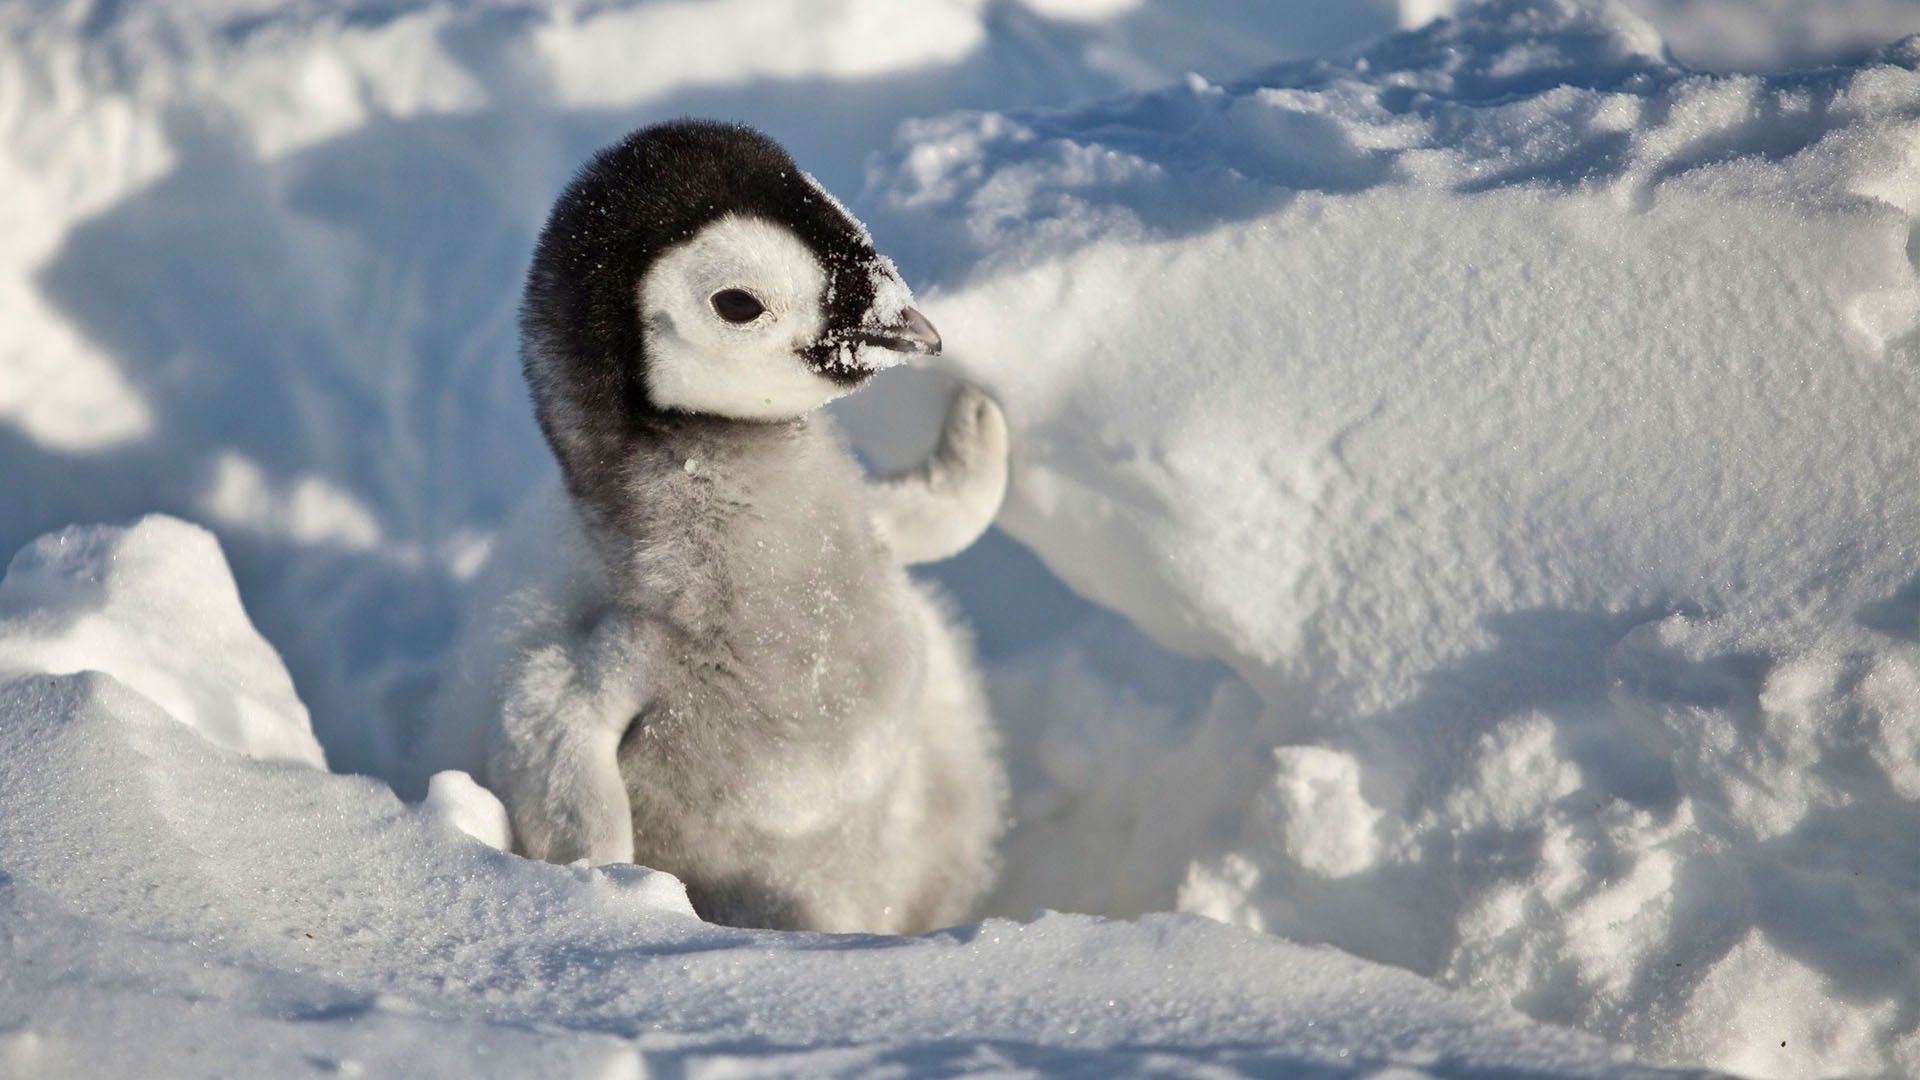 Cute Penguin Baby in Snow